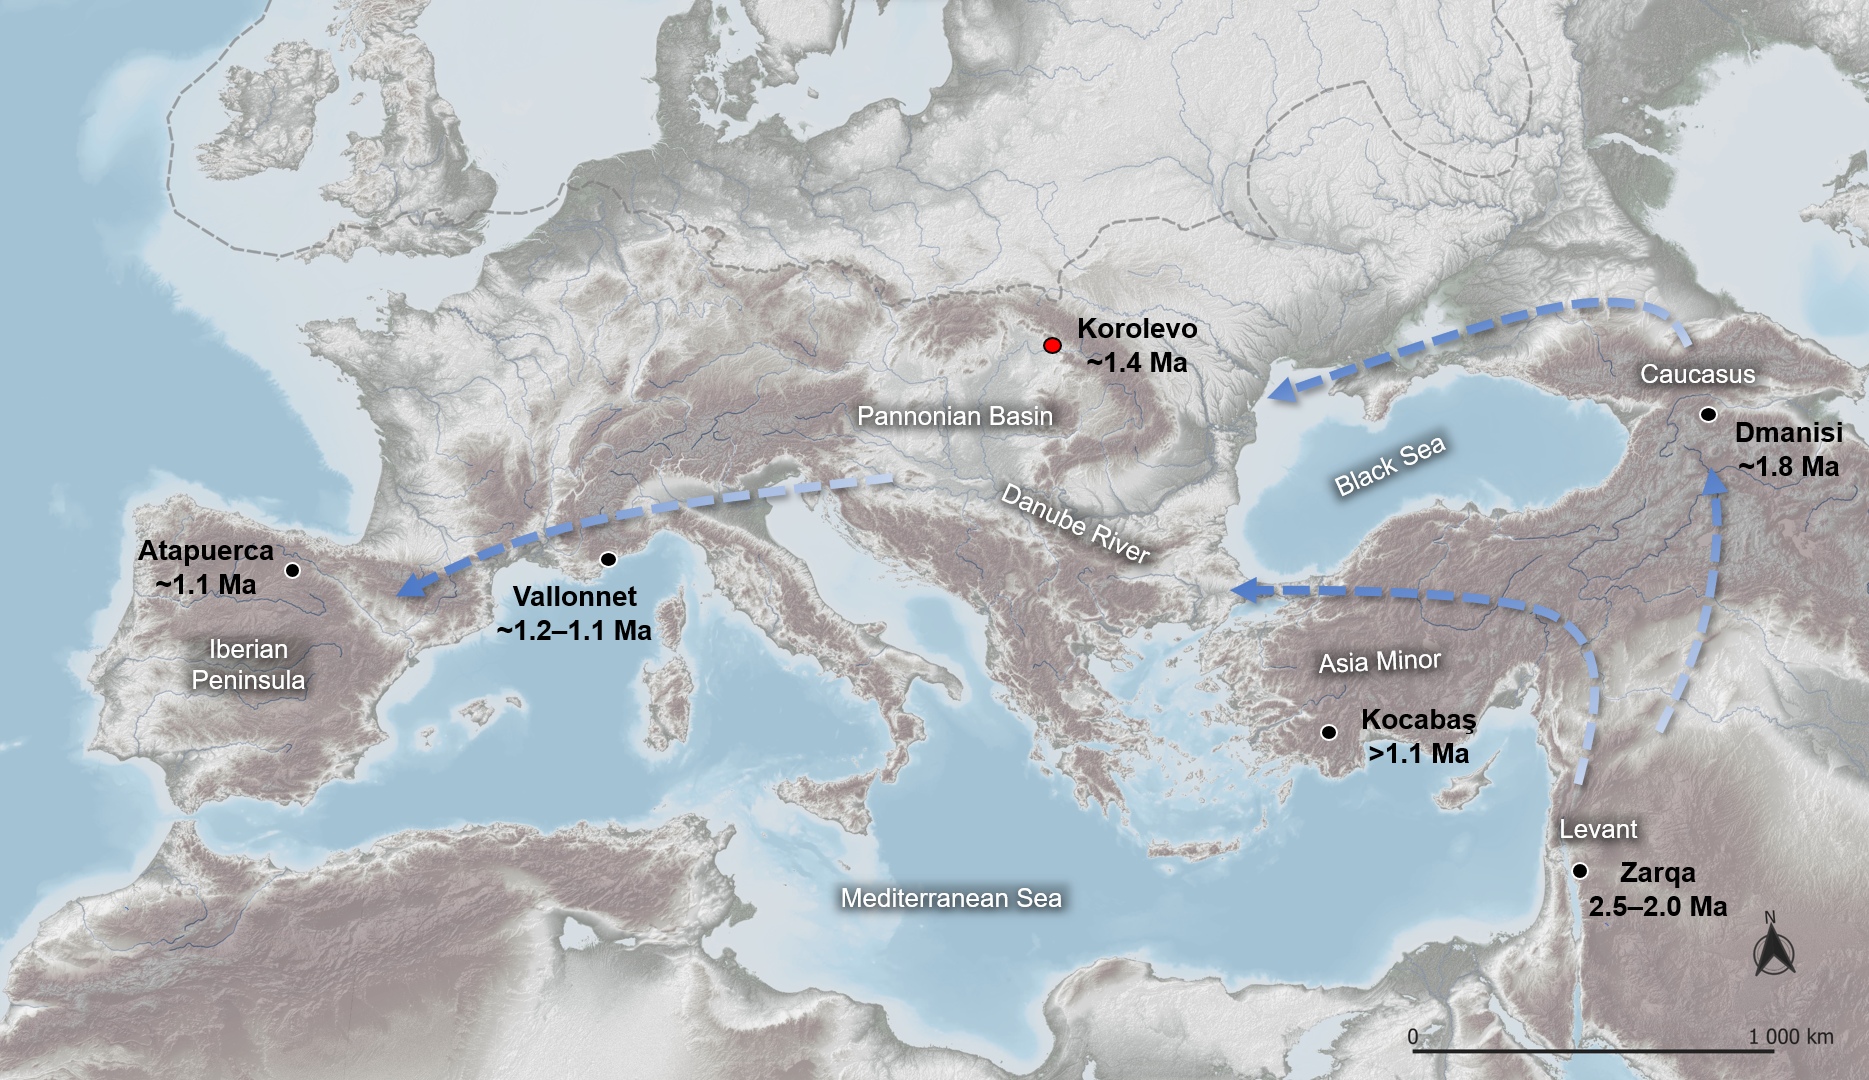 První lidé přišli do Evropy před 1,4 milionem let